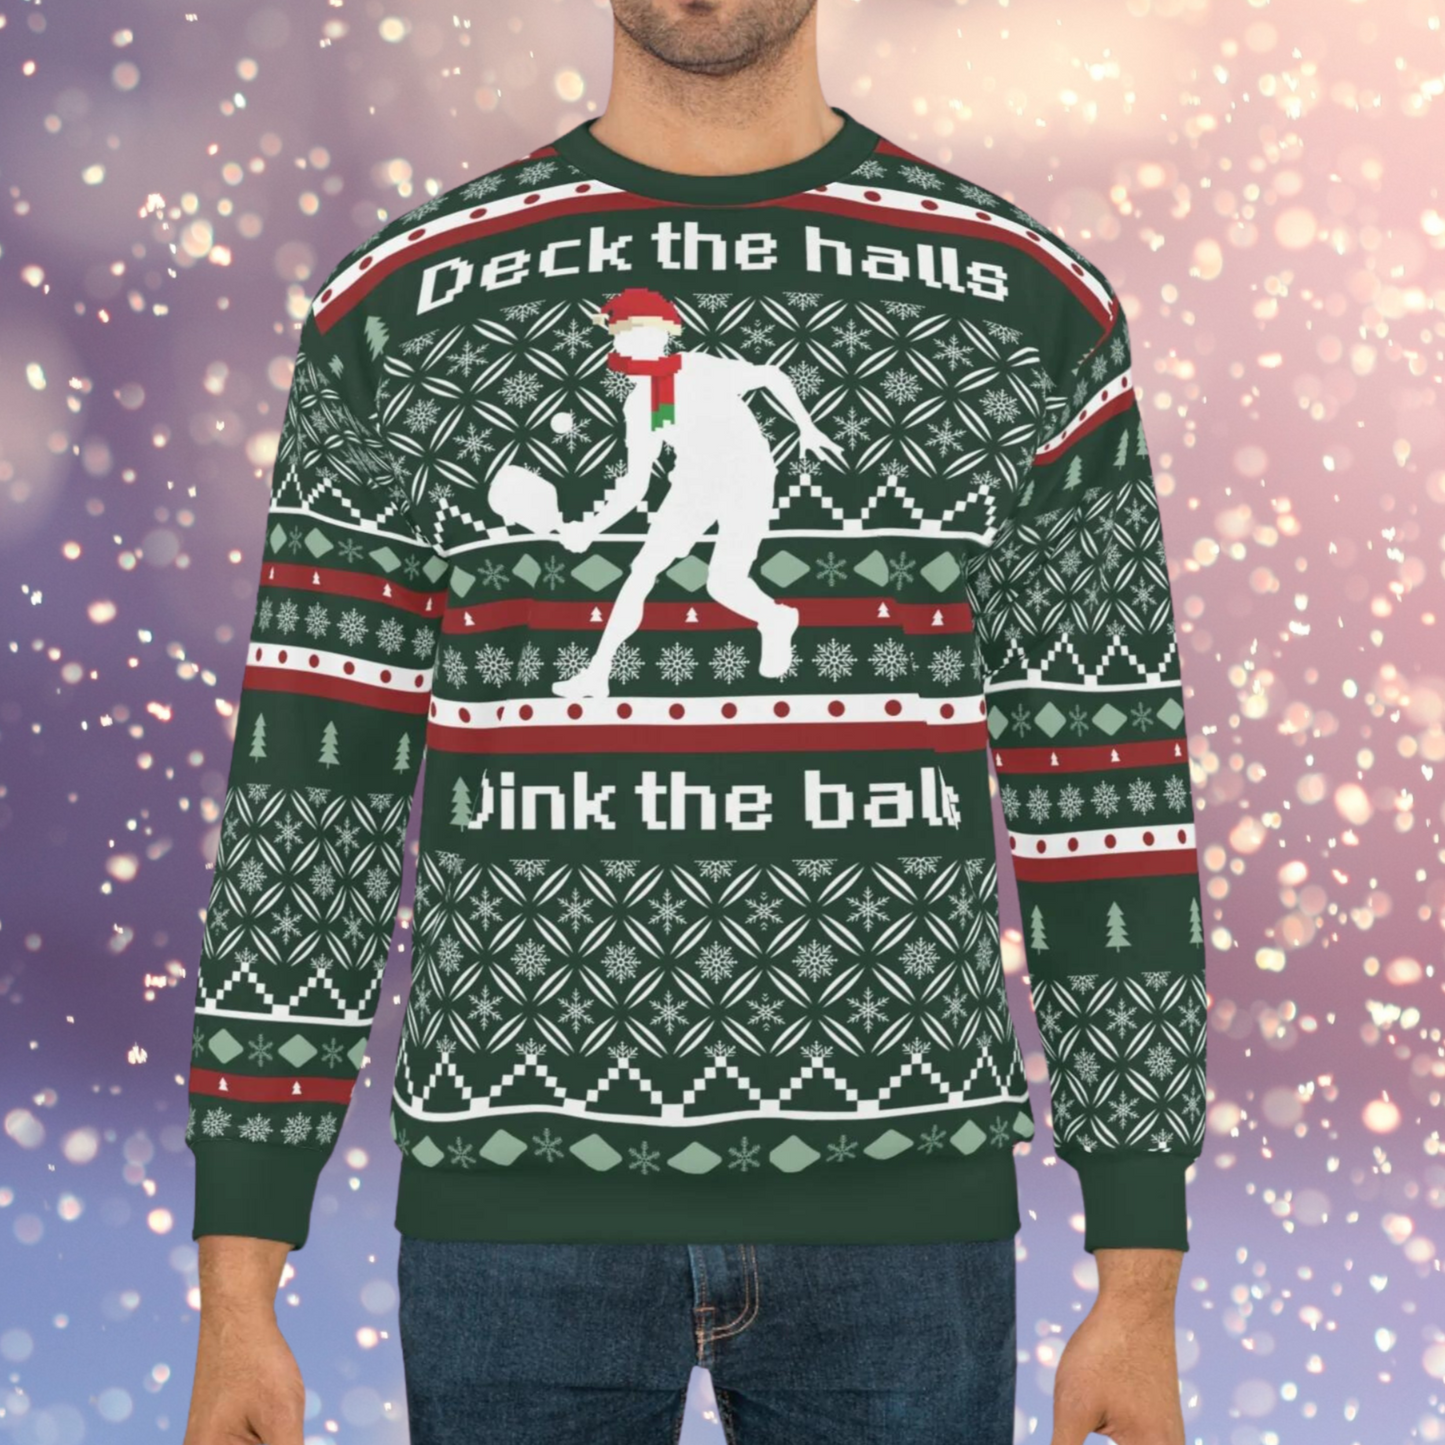 Deck the Halls and Dink the Balls Pickleball Ugly Christmas Sweatshirt